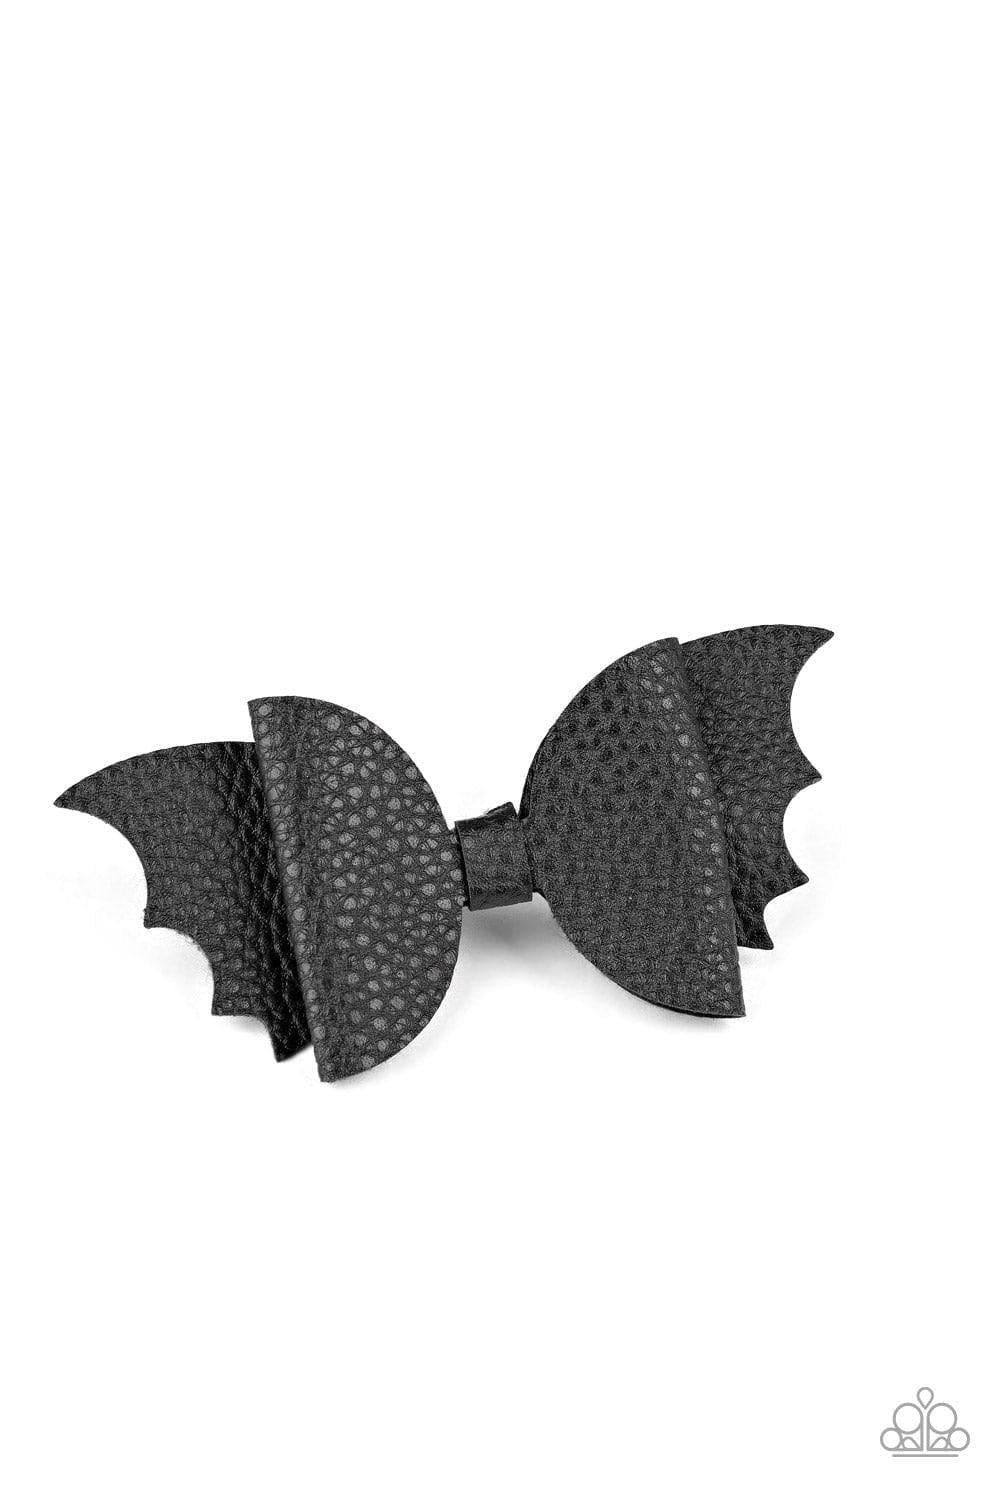 Paparazzi Accessories - Drive Them Batty! - Black Hair Clip - Bling by JessieK